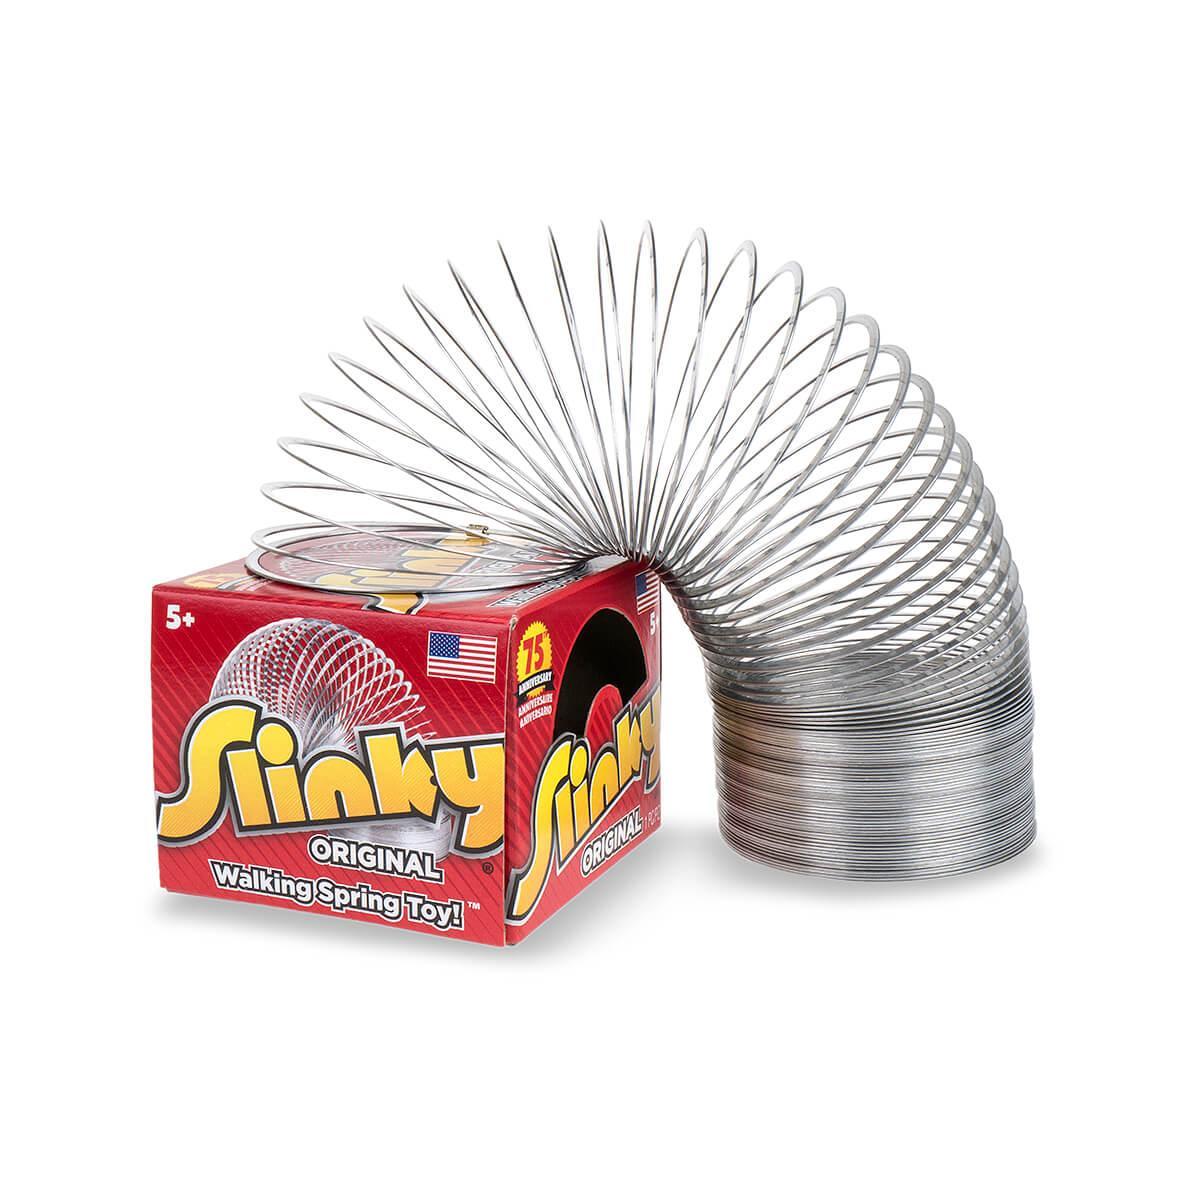 Original Plastic Slinky